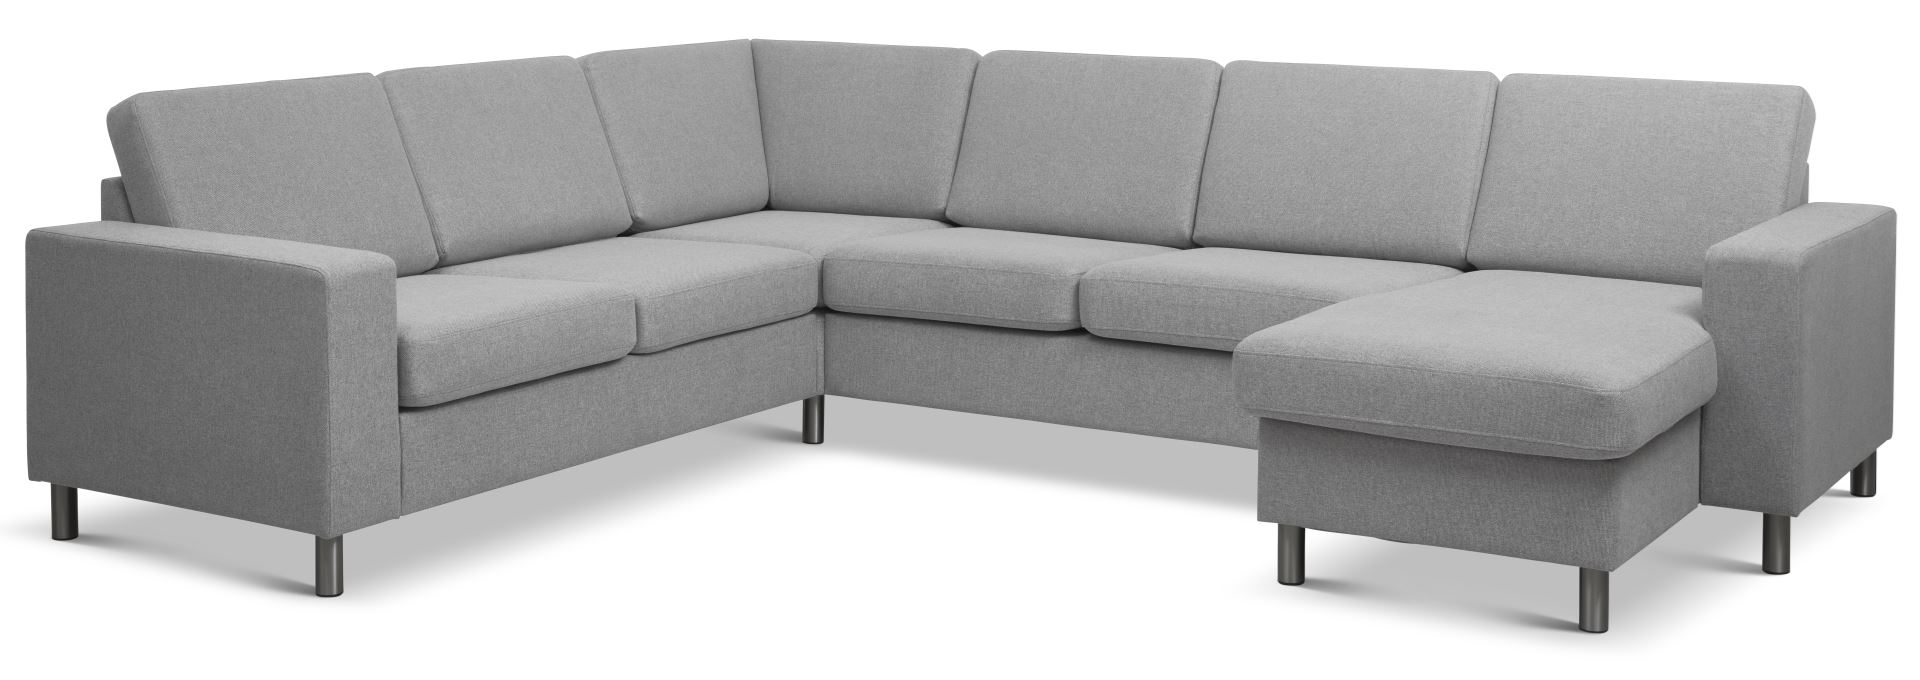 Pan set 6 U 2C3D sofa med chaiselong - grå polyester stof og børstet aluminium